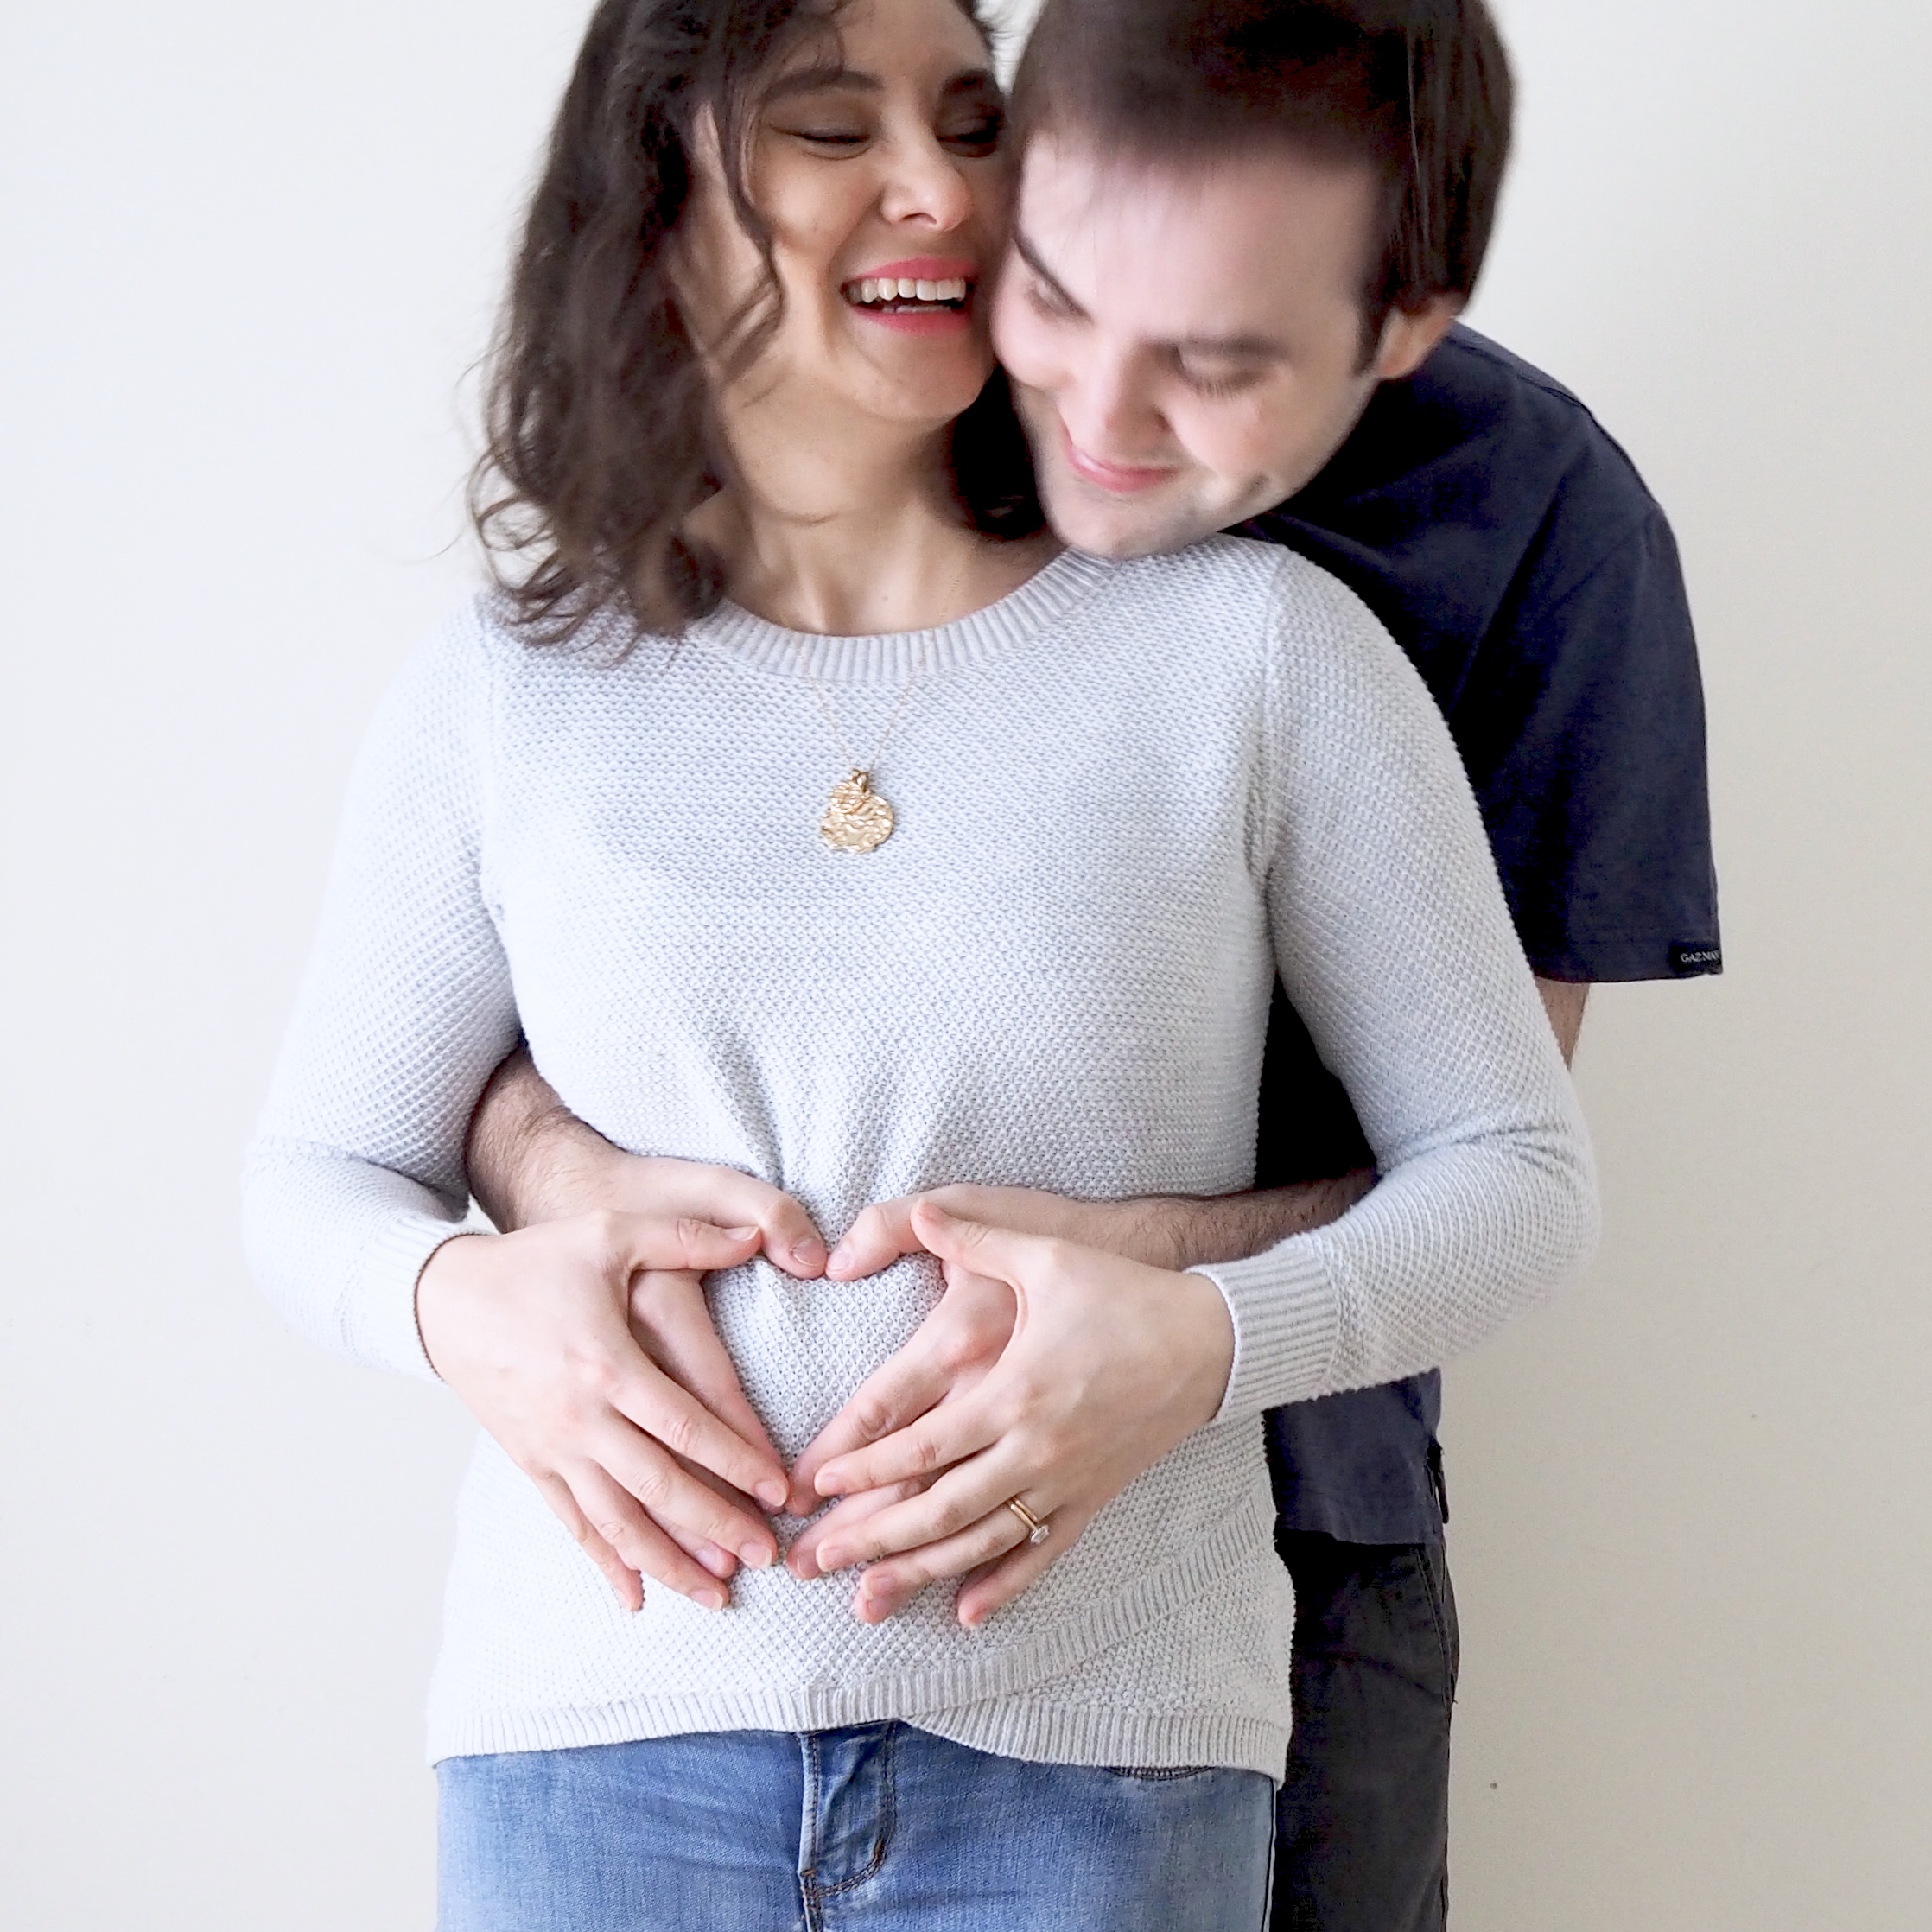 Pregnancy announcement 3 laurennatalia.co